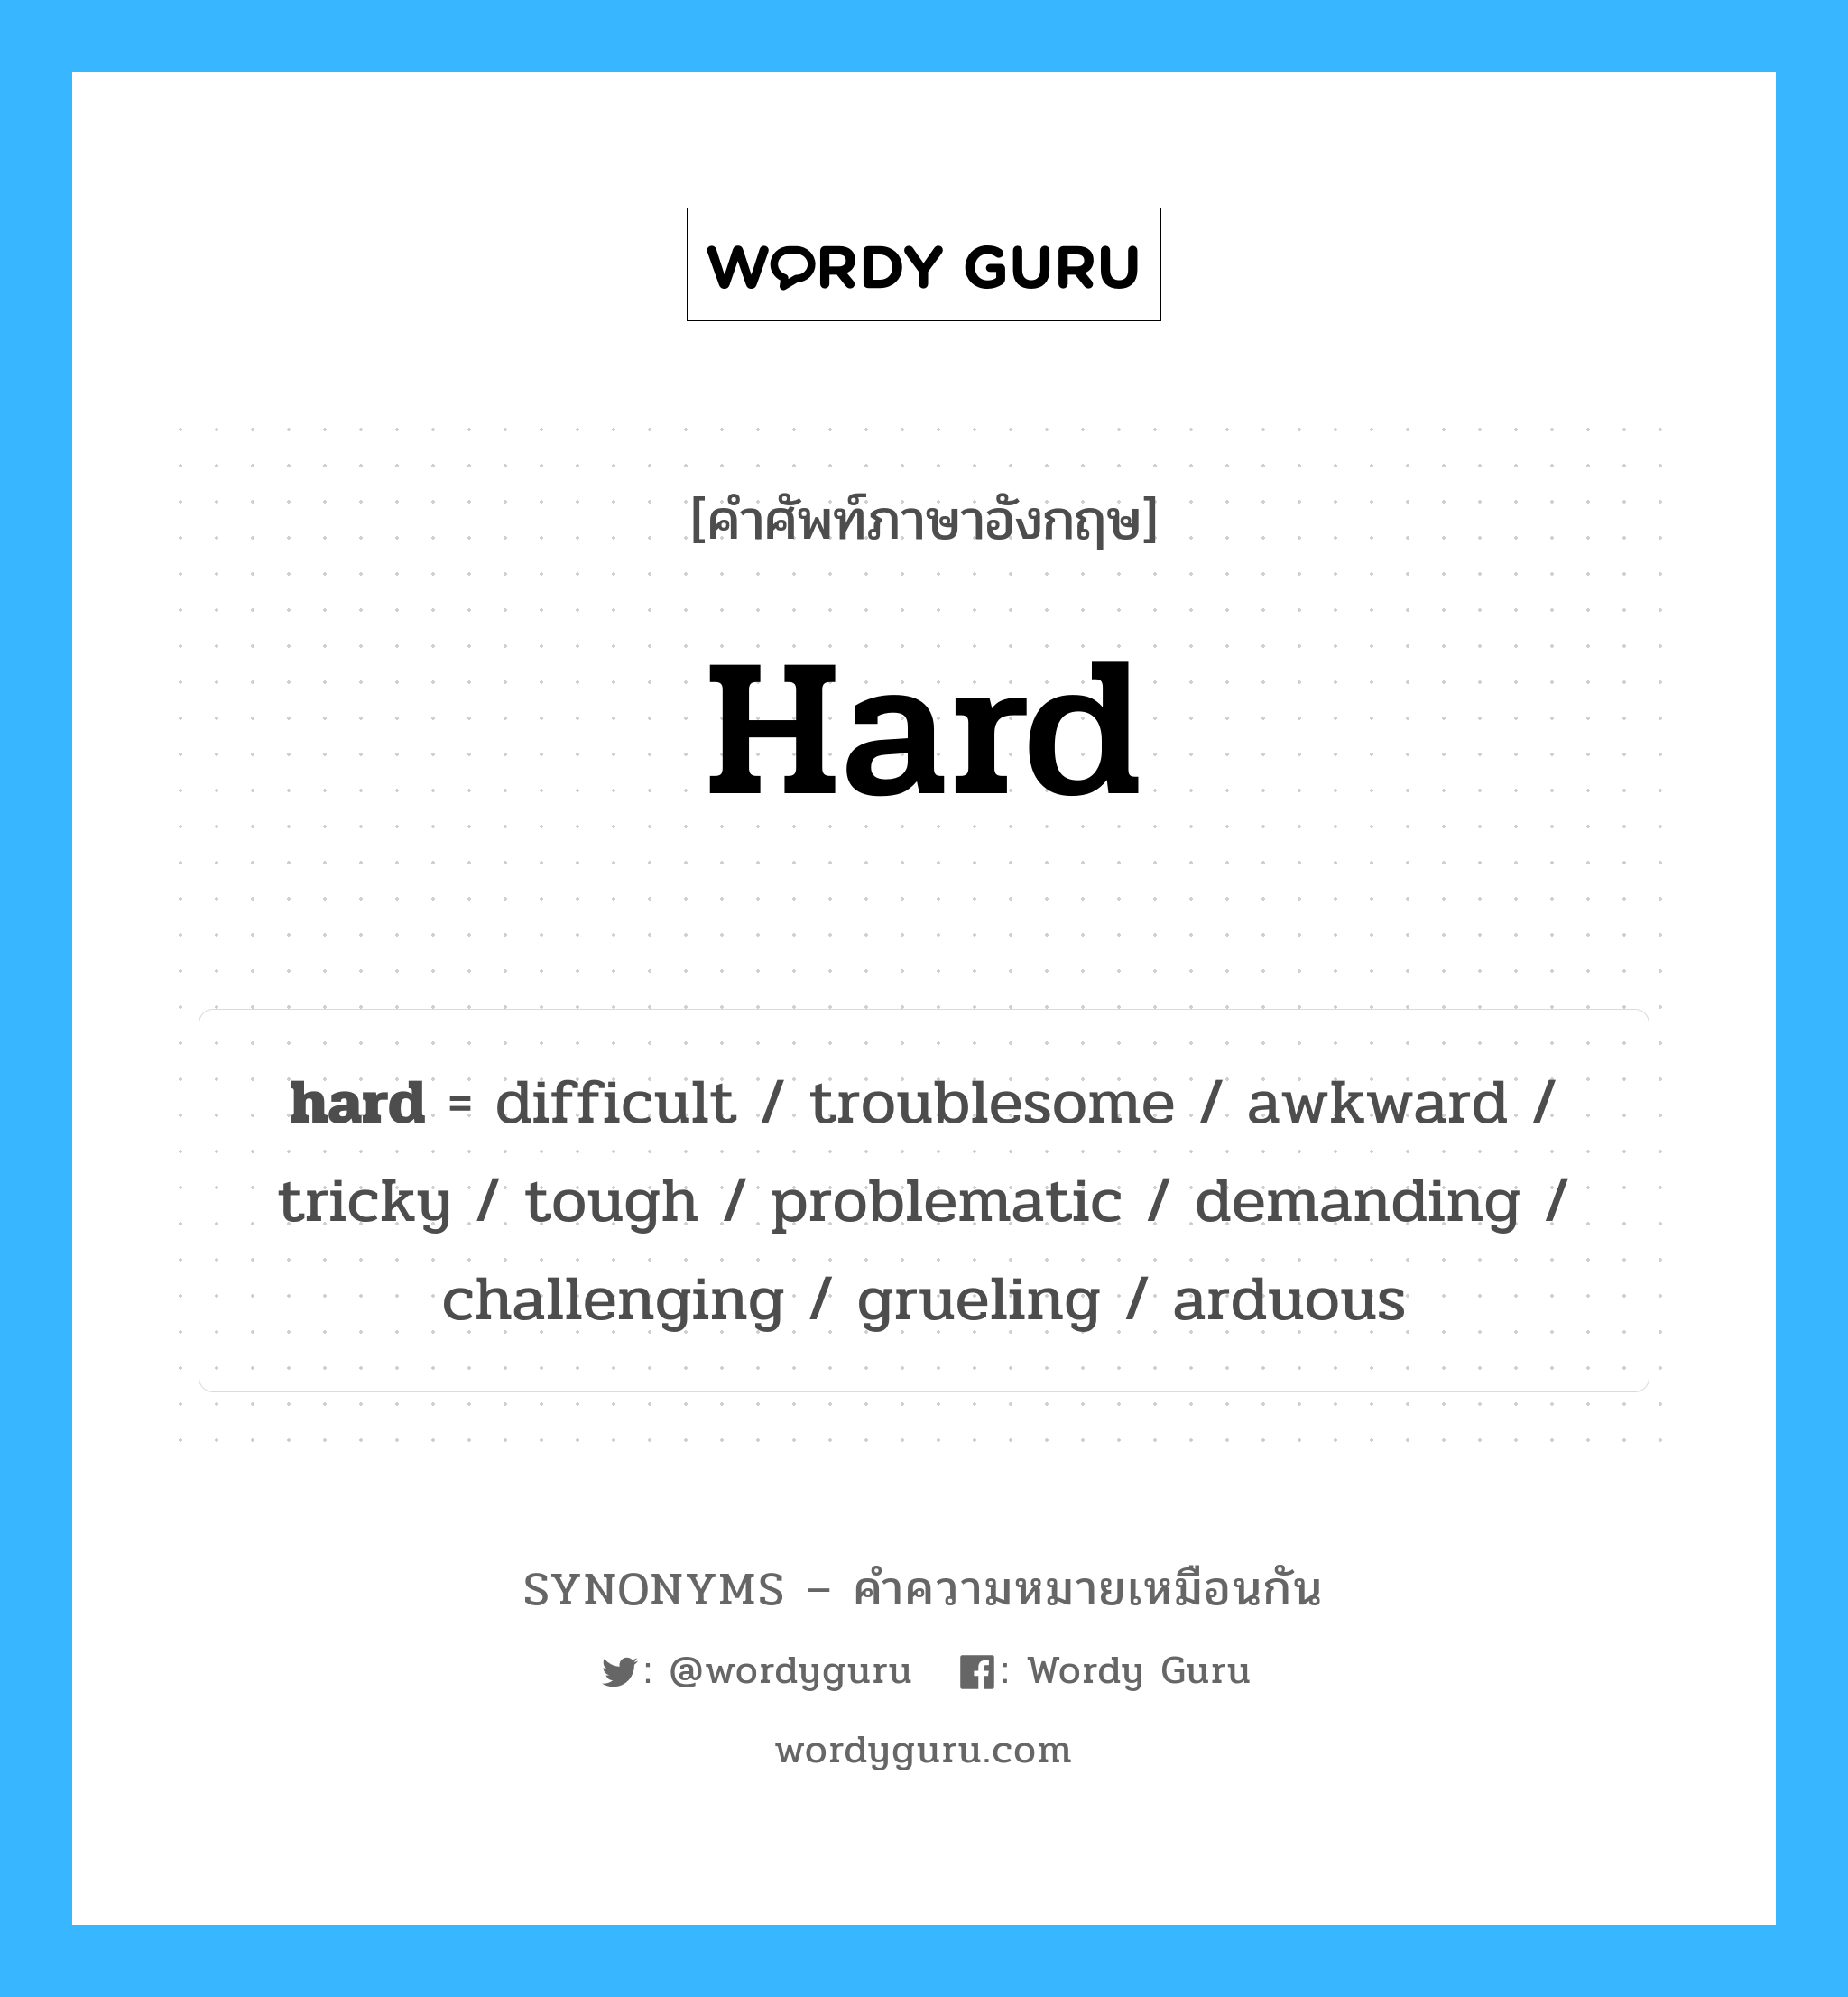 tough เป็นหนึ่งใน hard และมีคำอื่น ๆ อีกดังนี้, คำศัพท์ภาษาอังกฤษ tough ความหมายคล้ายกันกับ hard แปลว่า ยากลำบาก หมวด hard